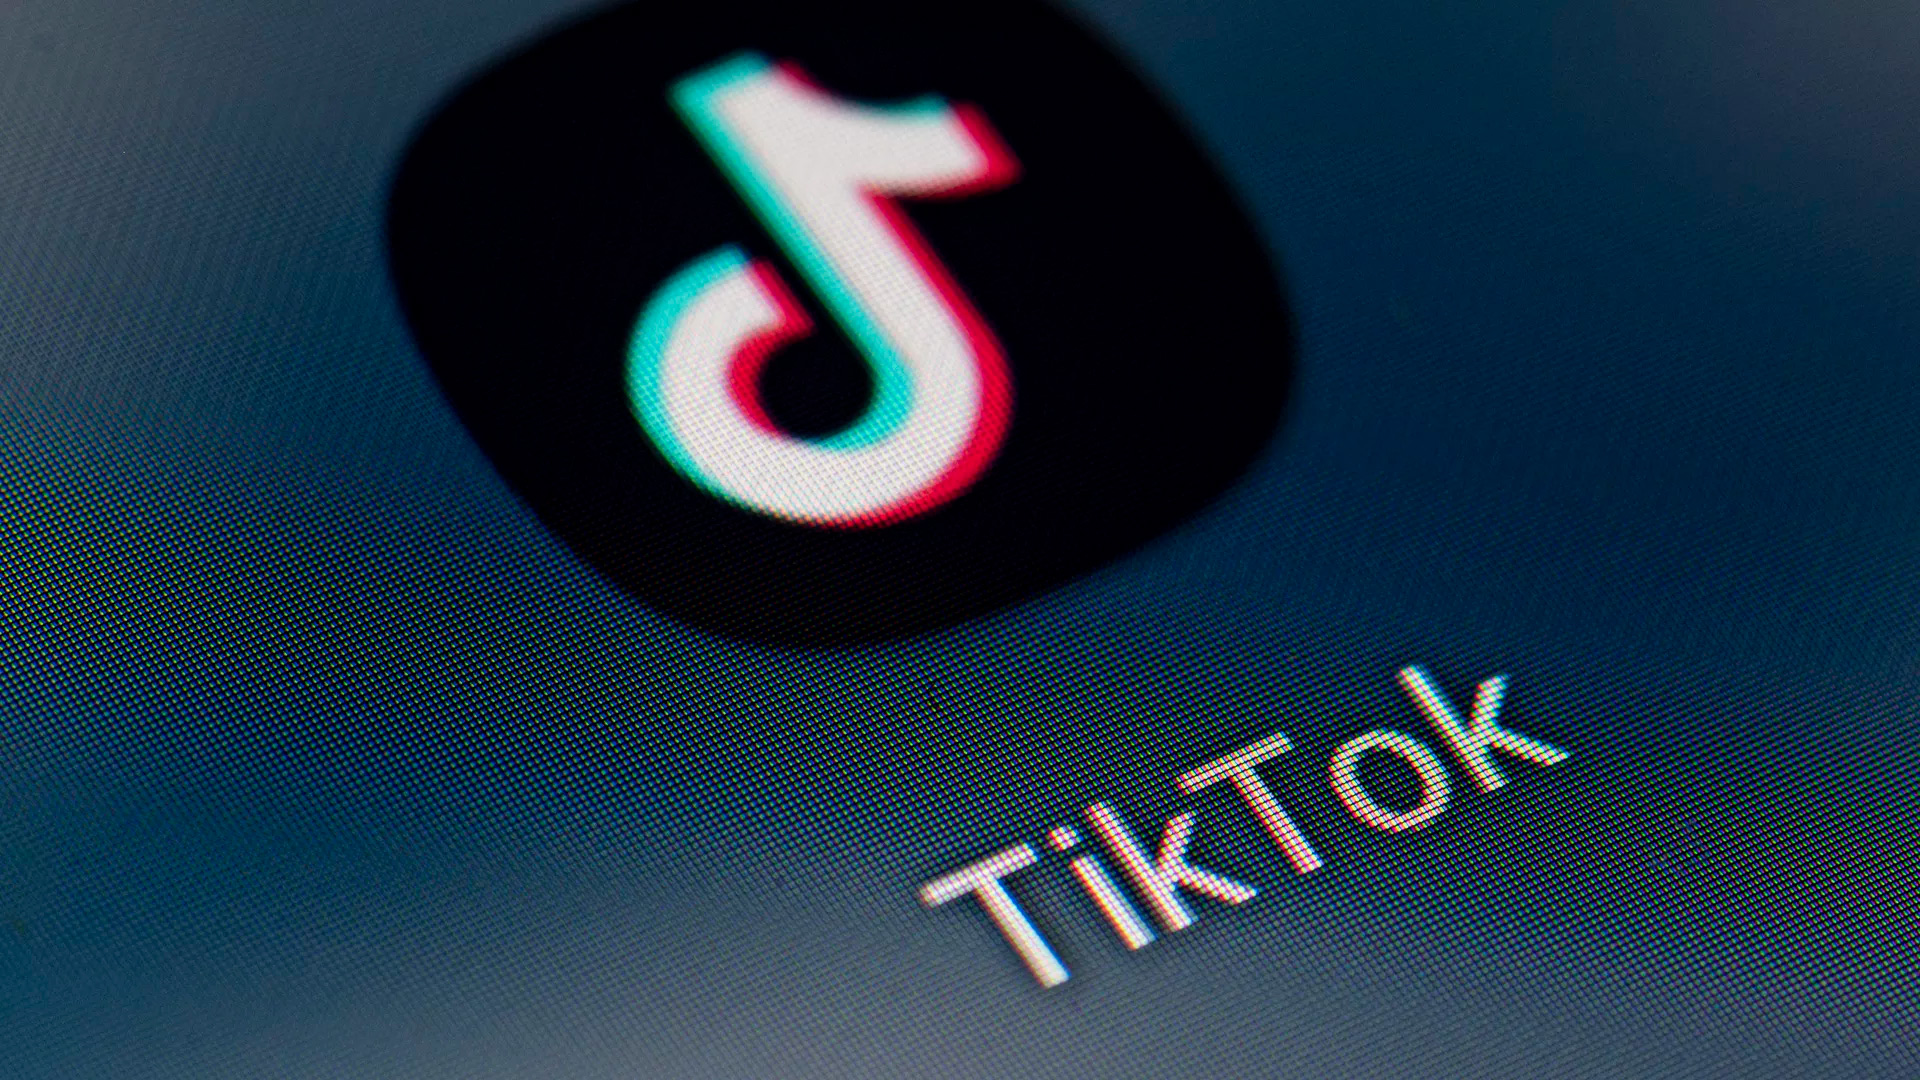 Senate passes bill to ban TikTok on government devices